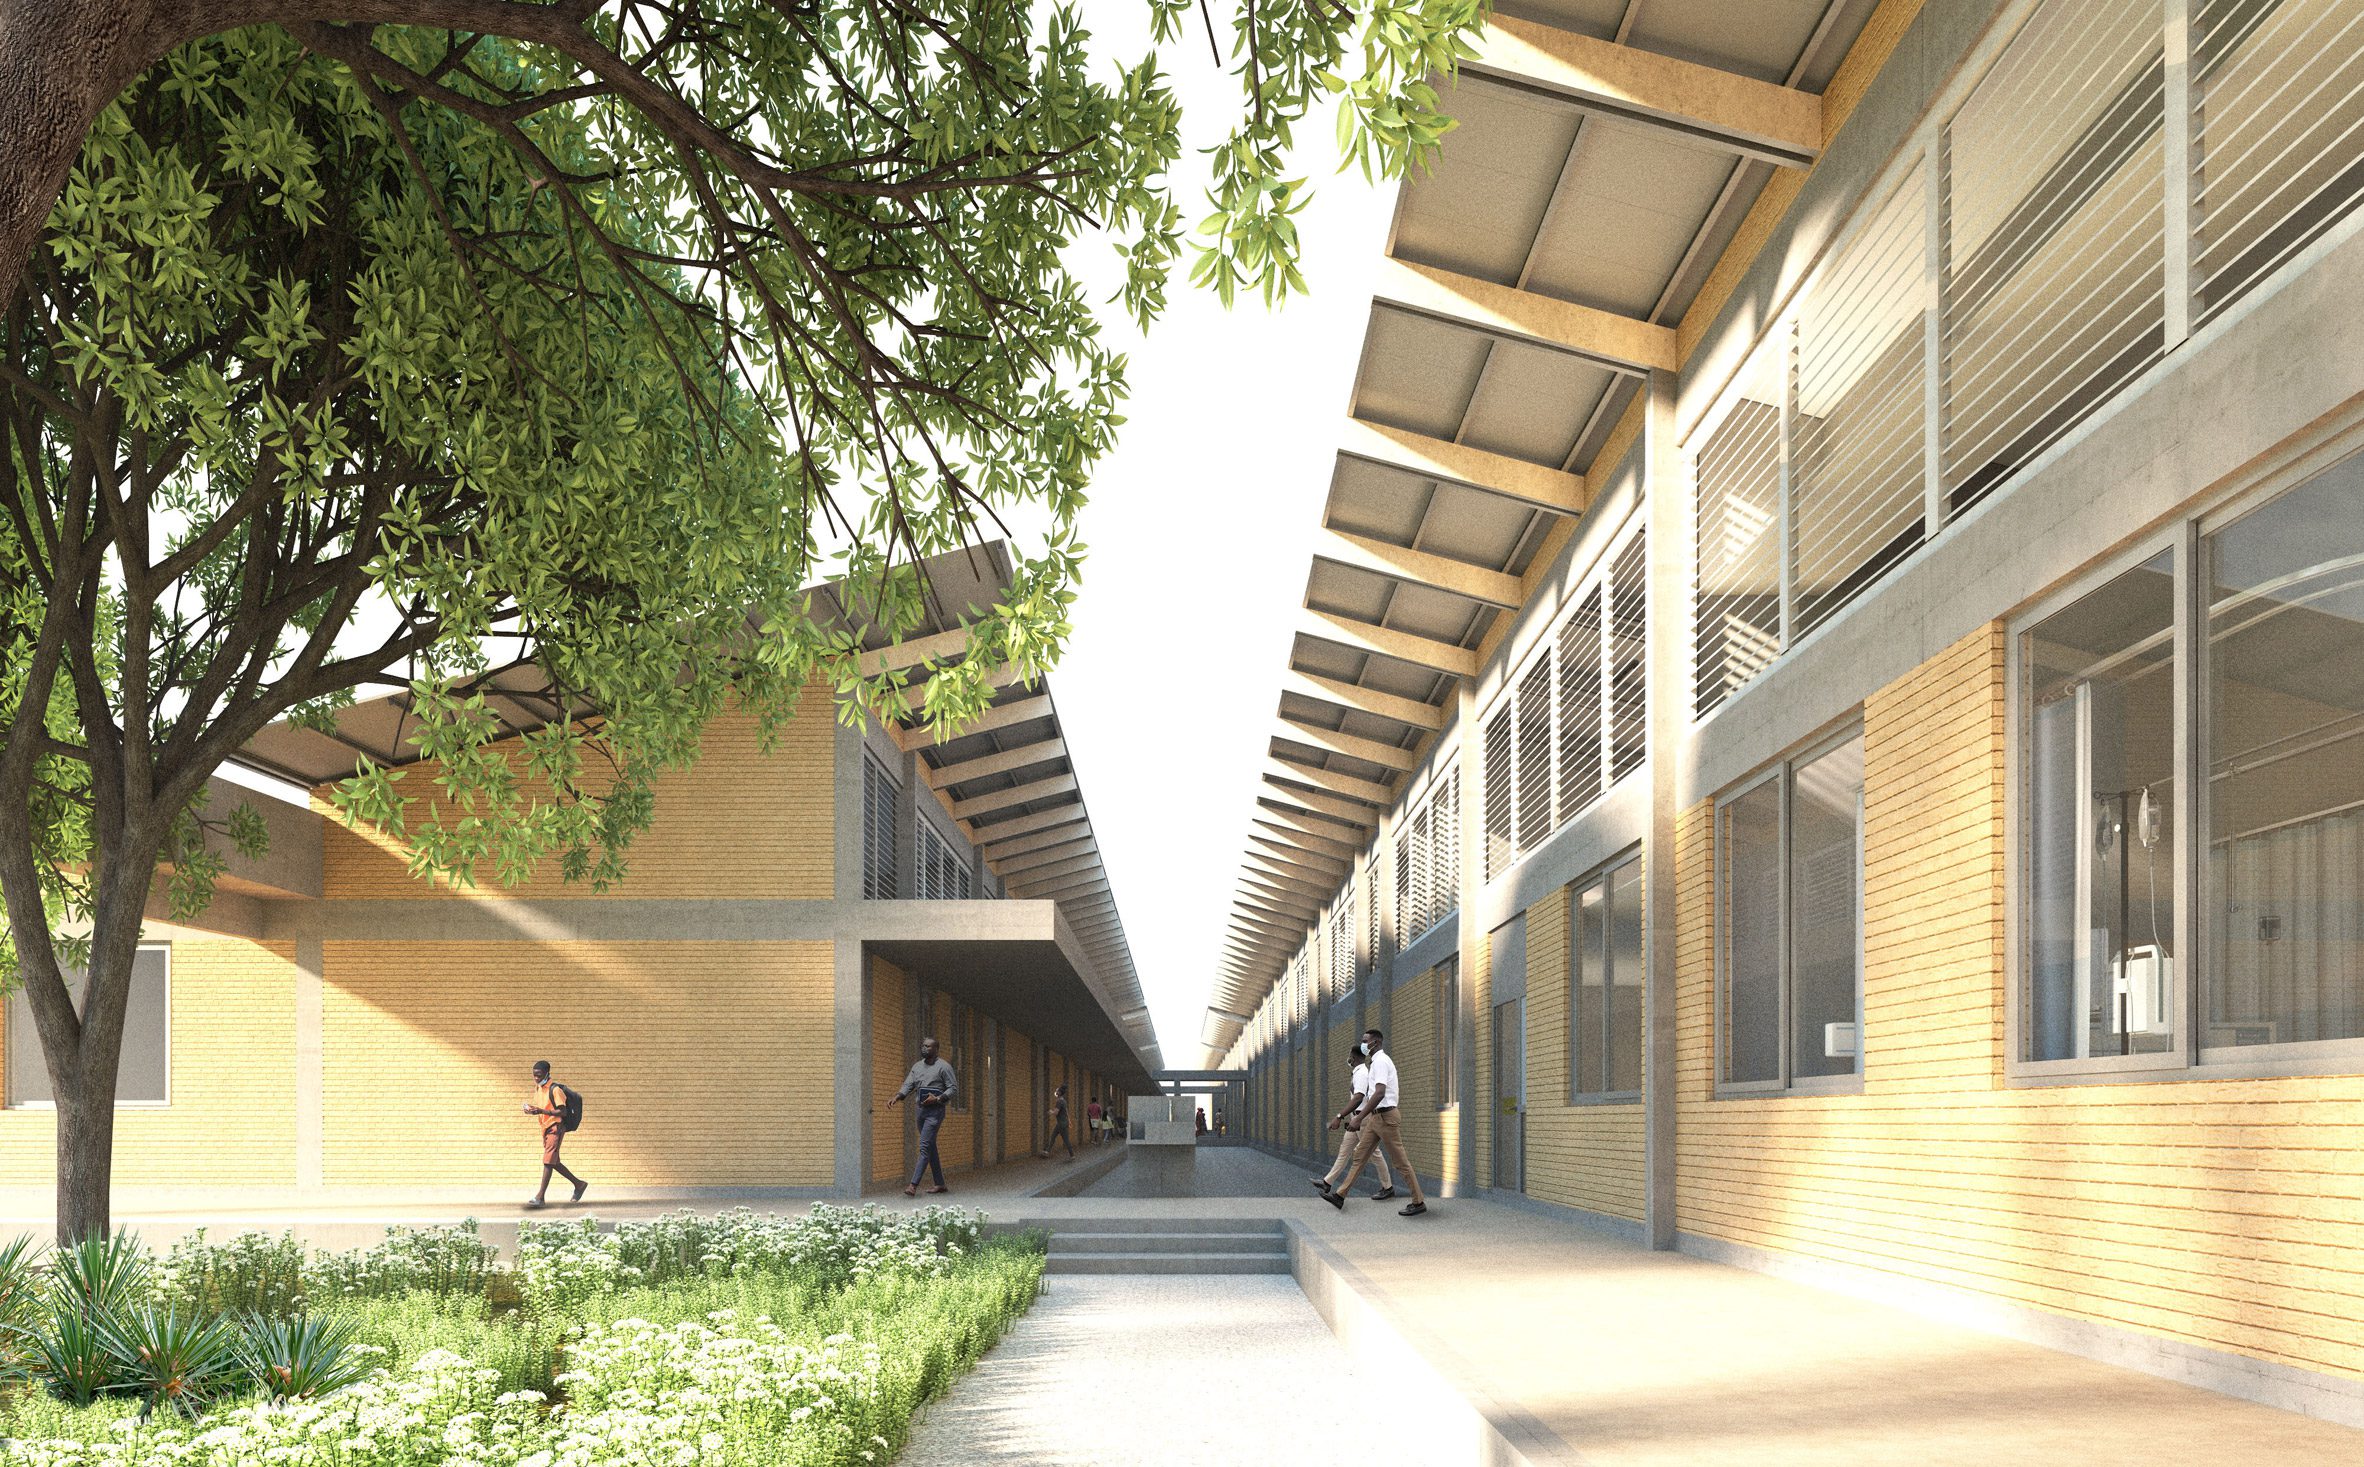 Linear blocks at David Adjaye-designed building